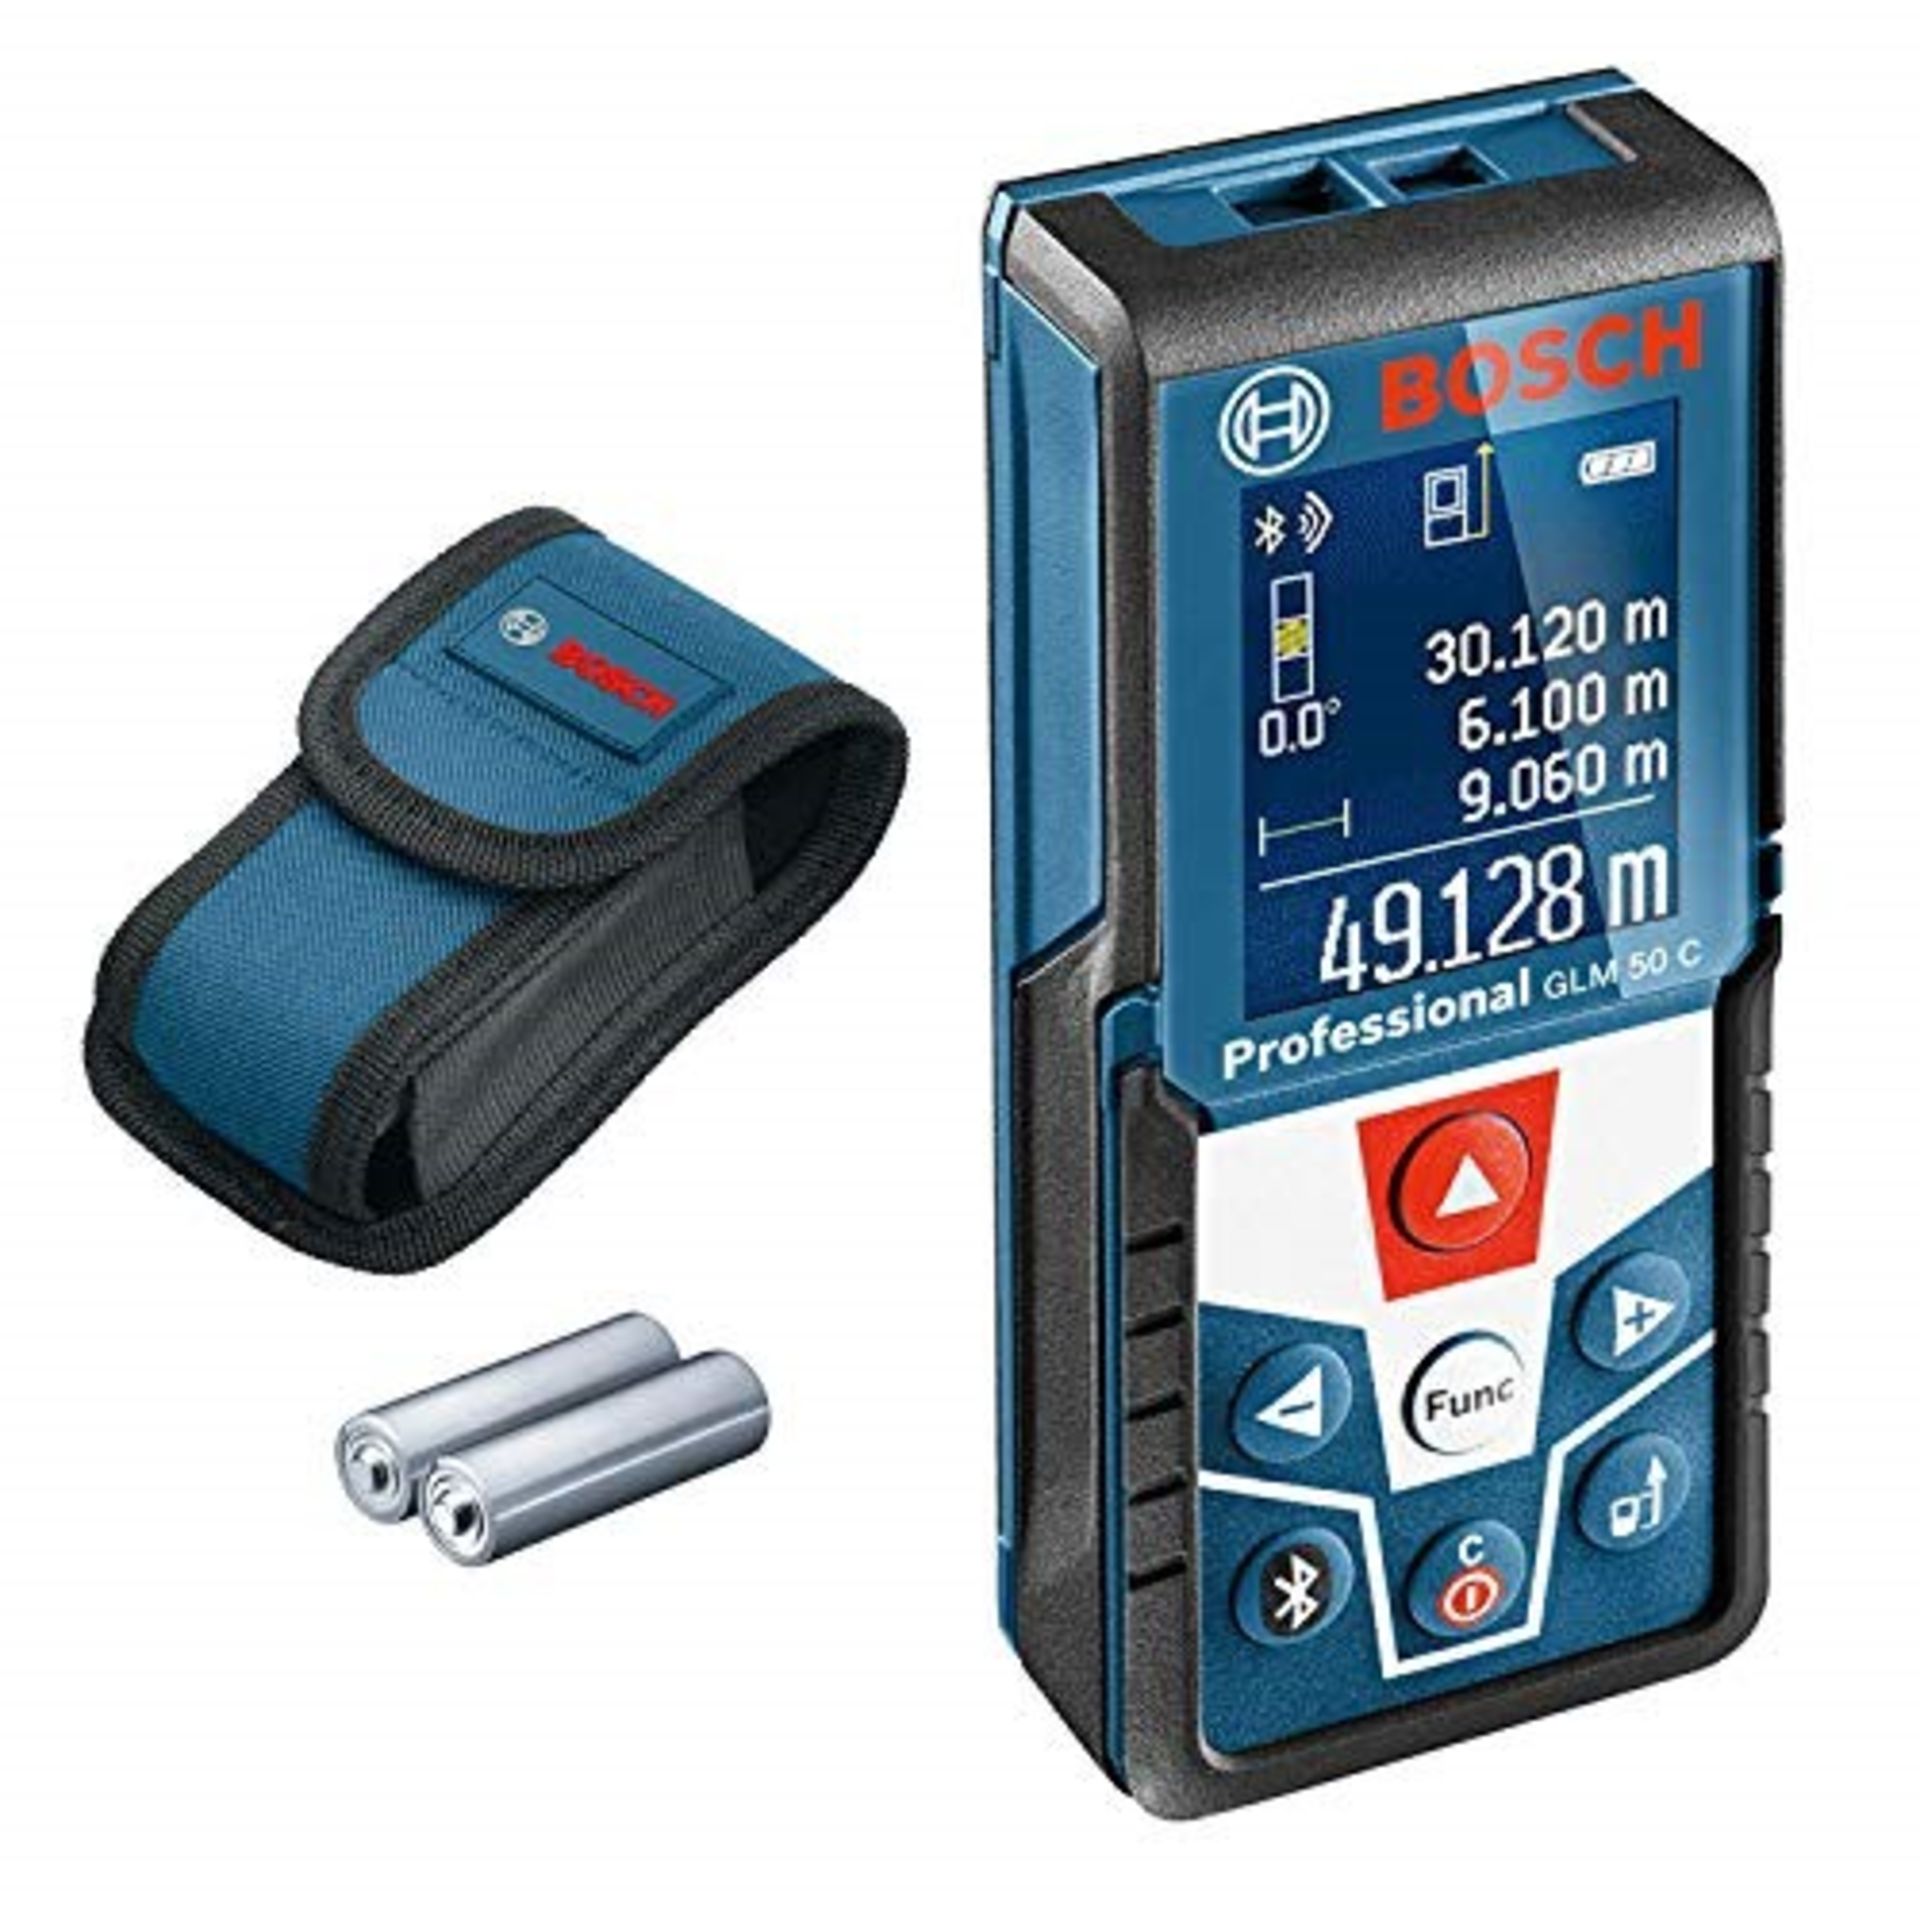 RRP £117.00 Bosch Professional laser measure GLM 50 C (Data